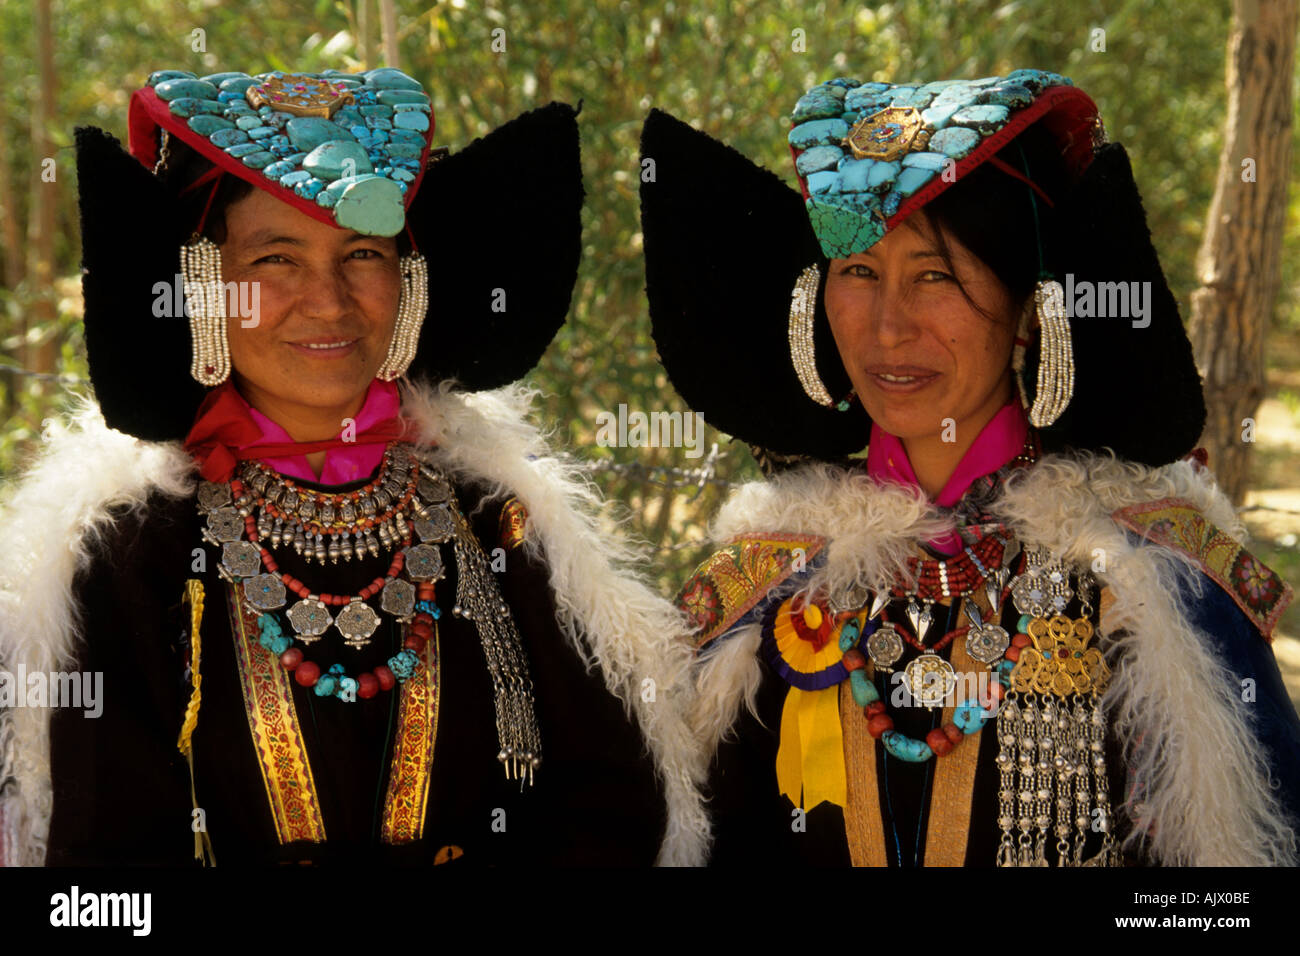 India Ladakh Leh women traditional dress people Stock Photo - Alamy